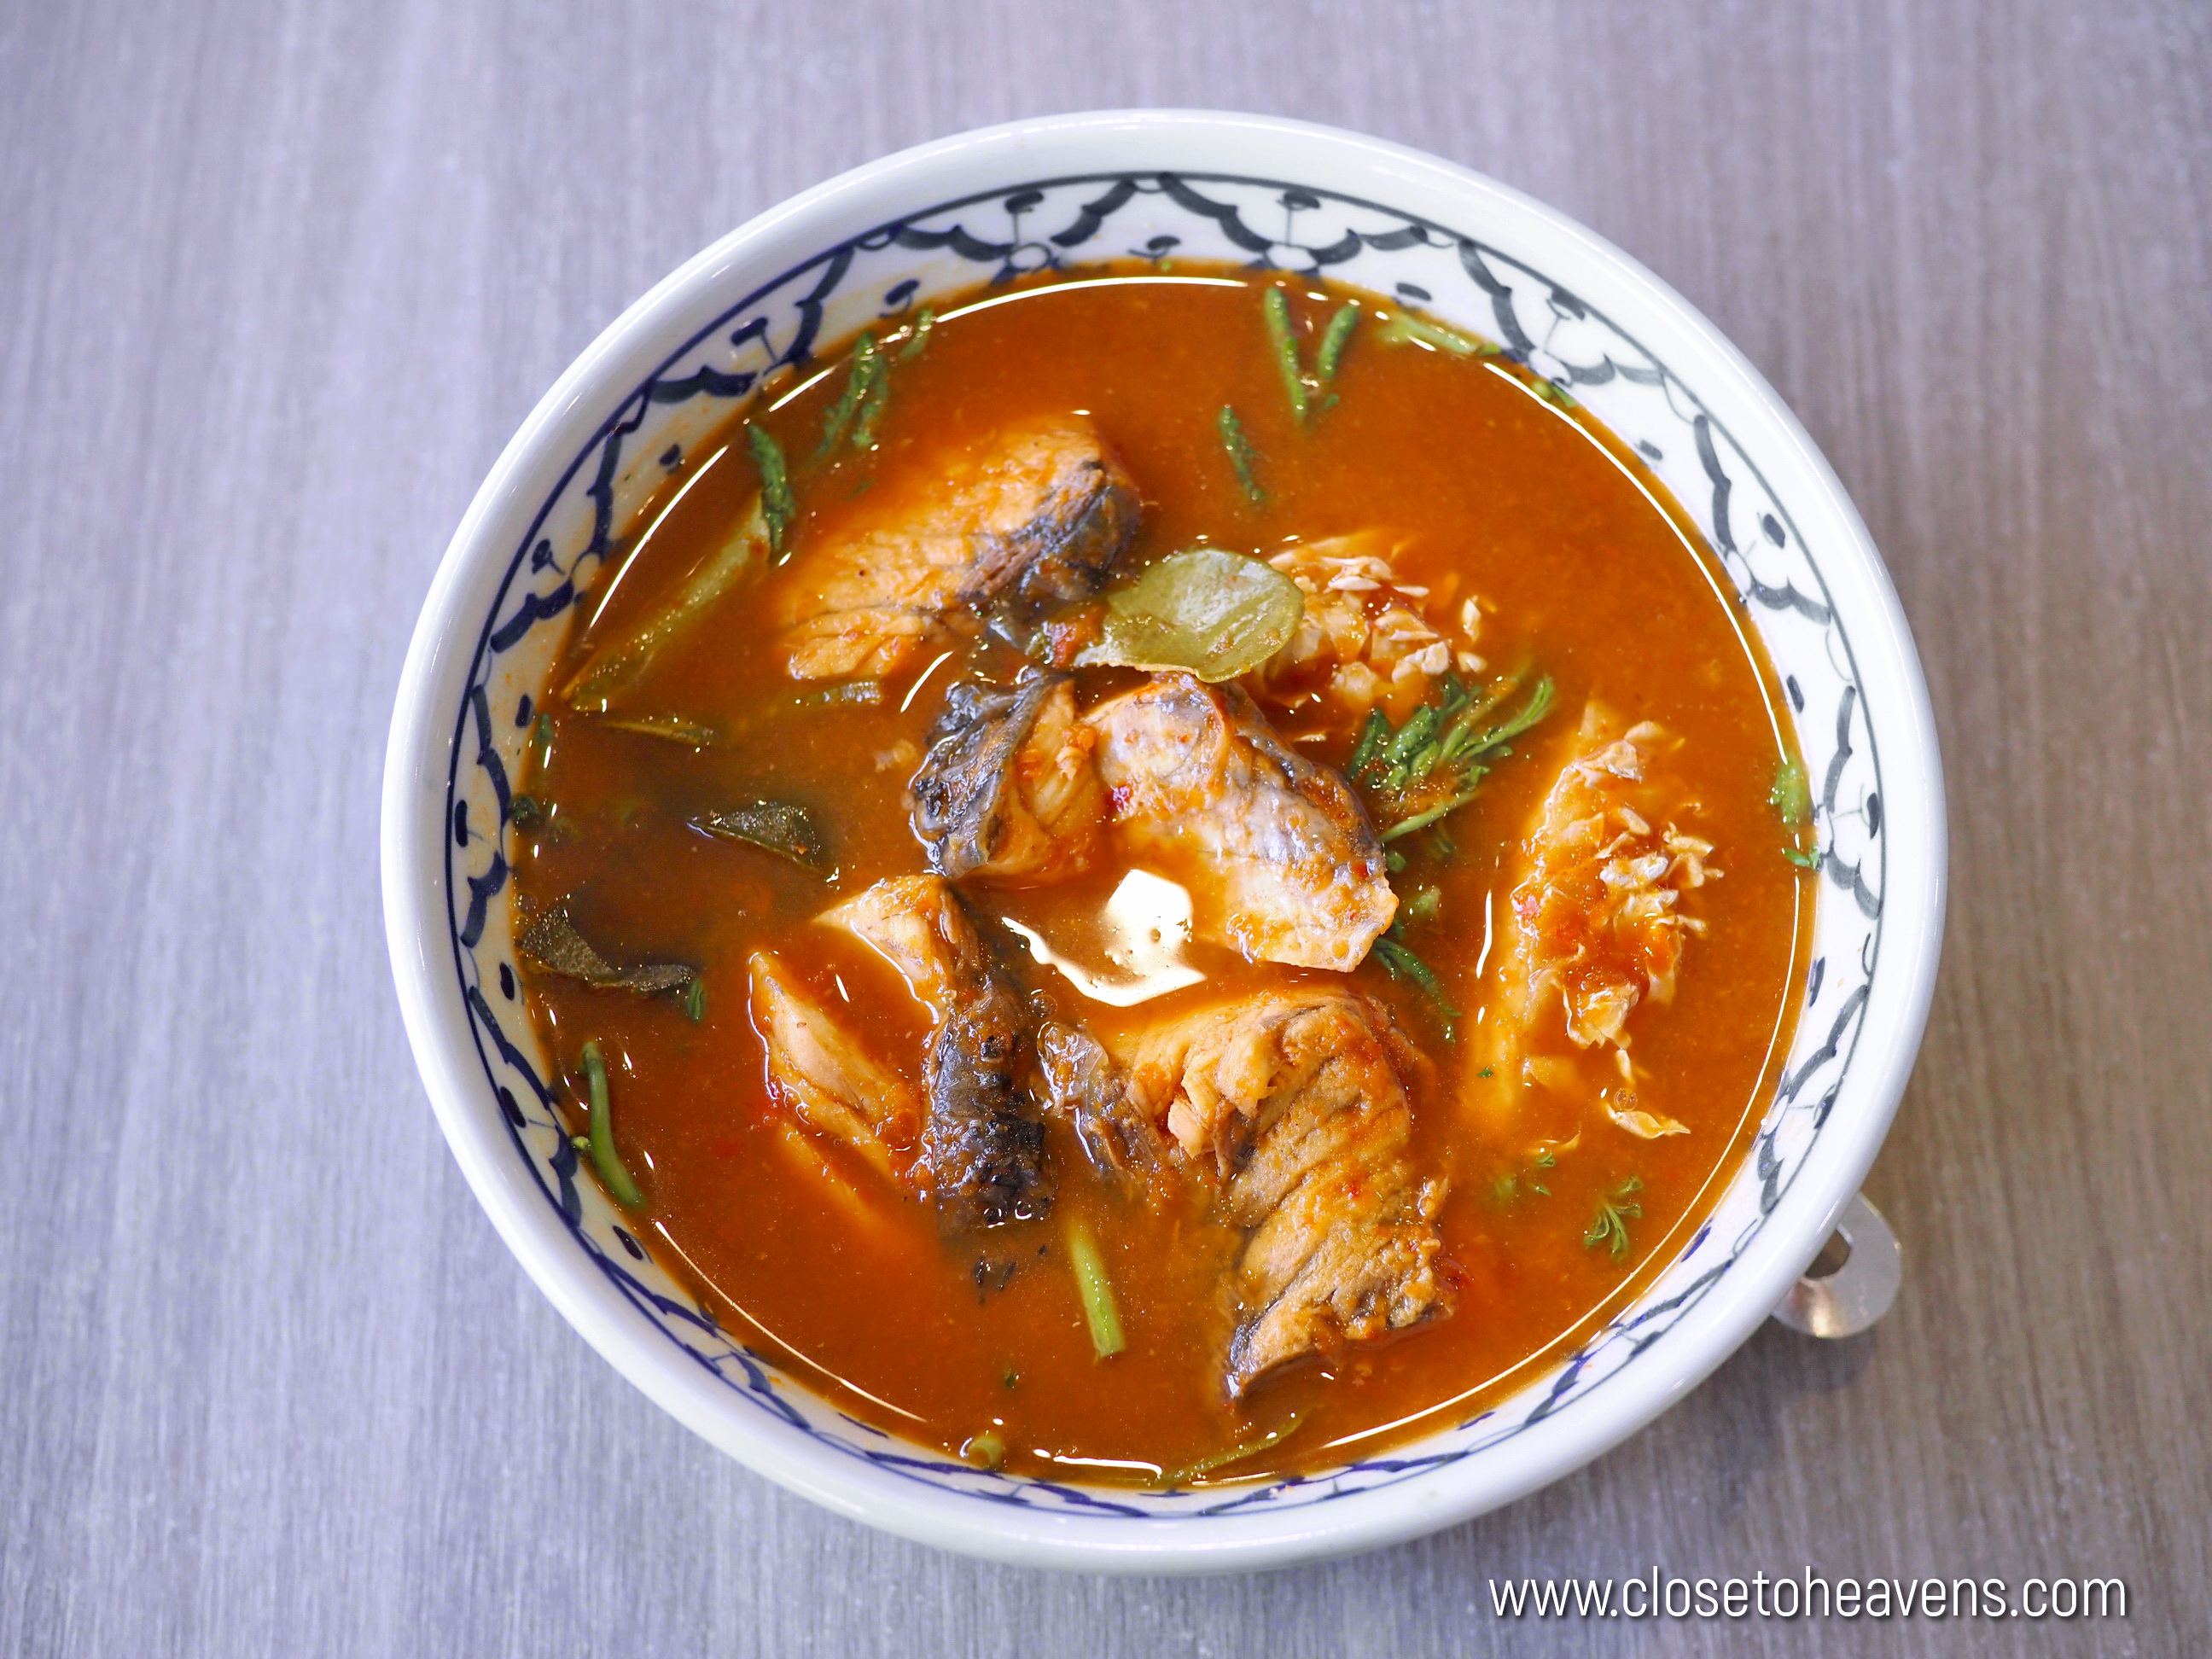 Kungthong Seafood กุ้งทอง ซีฟู้ด พระราม 4